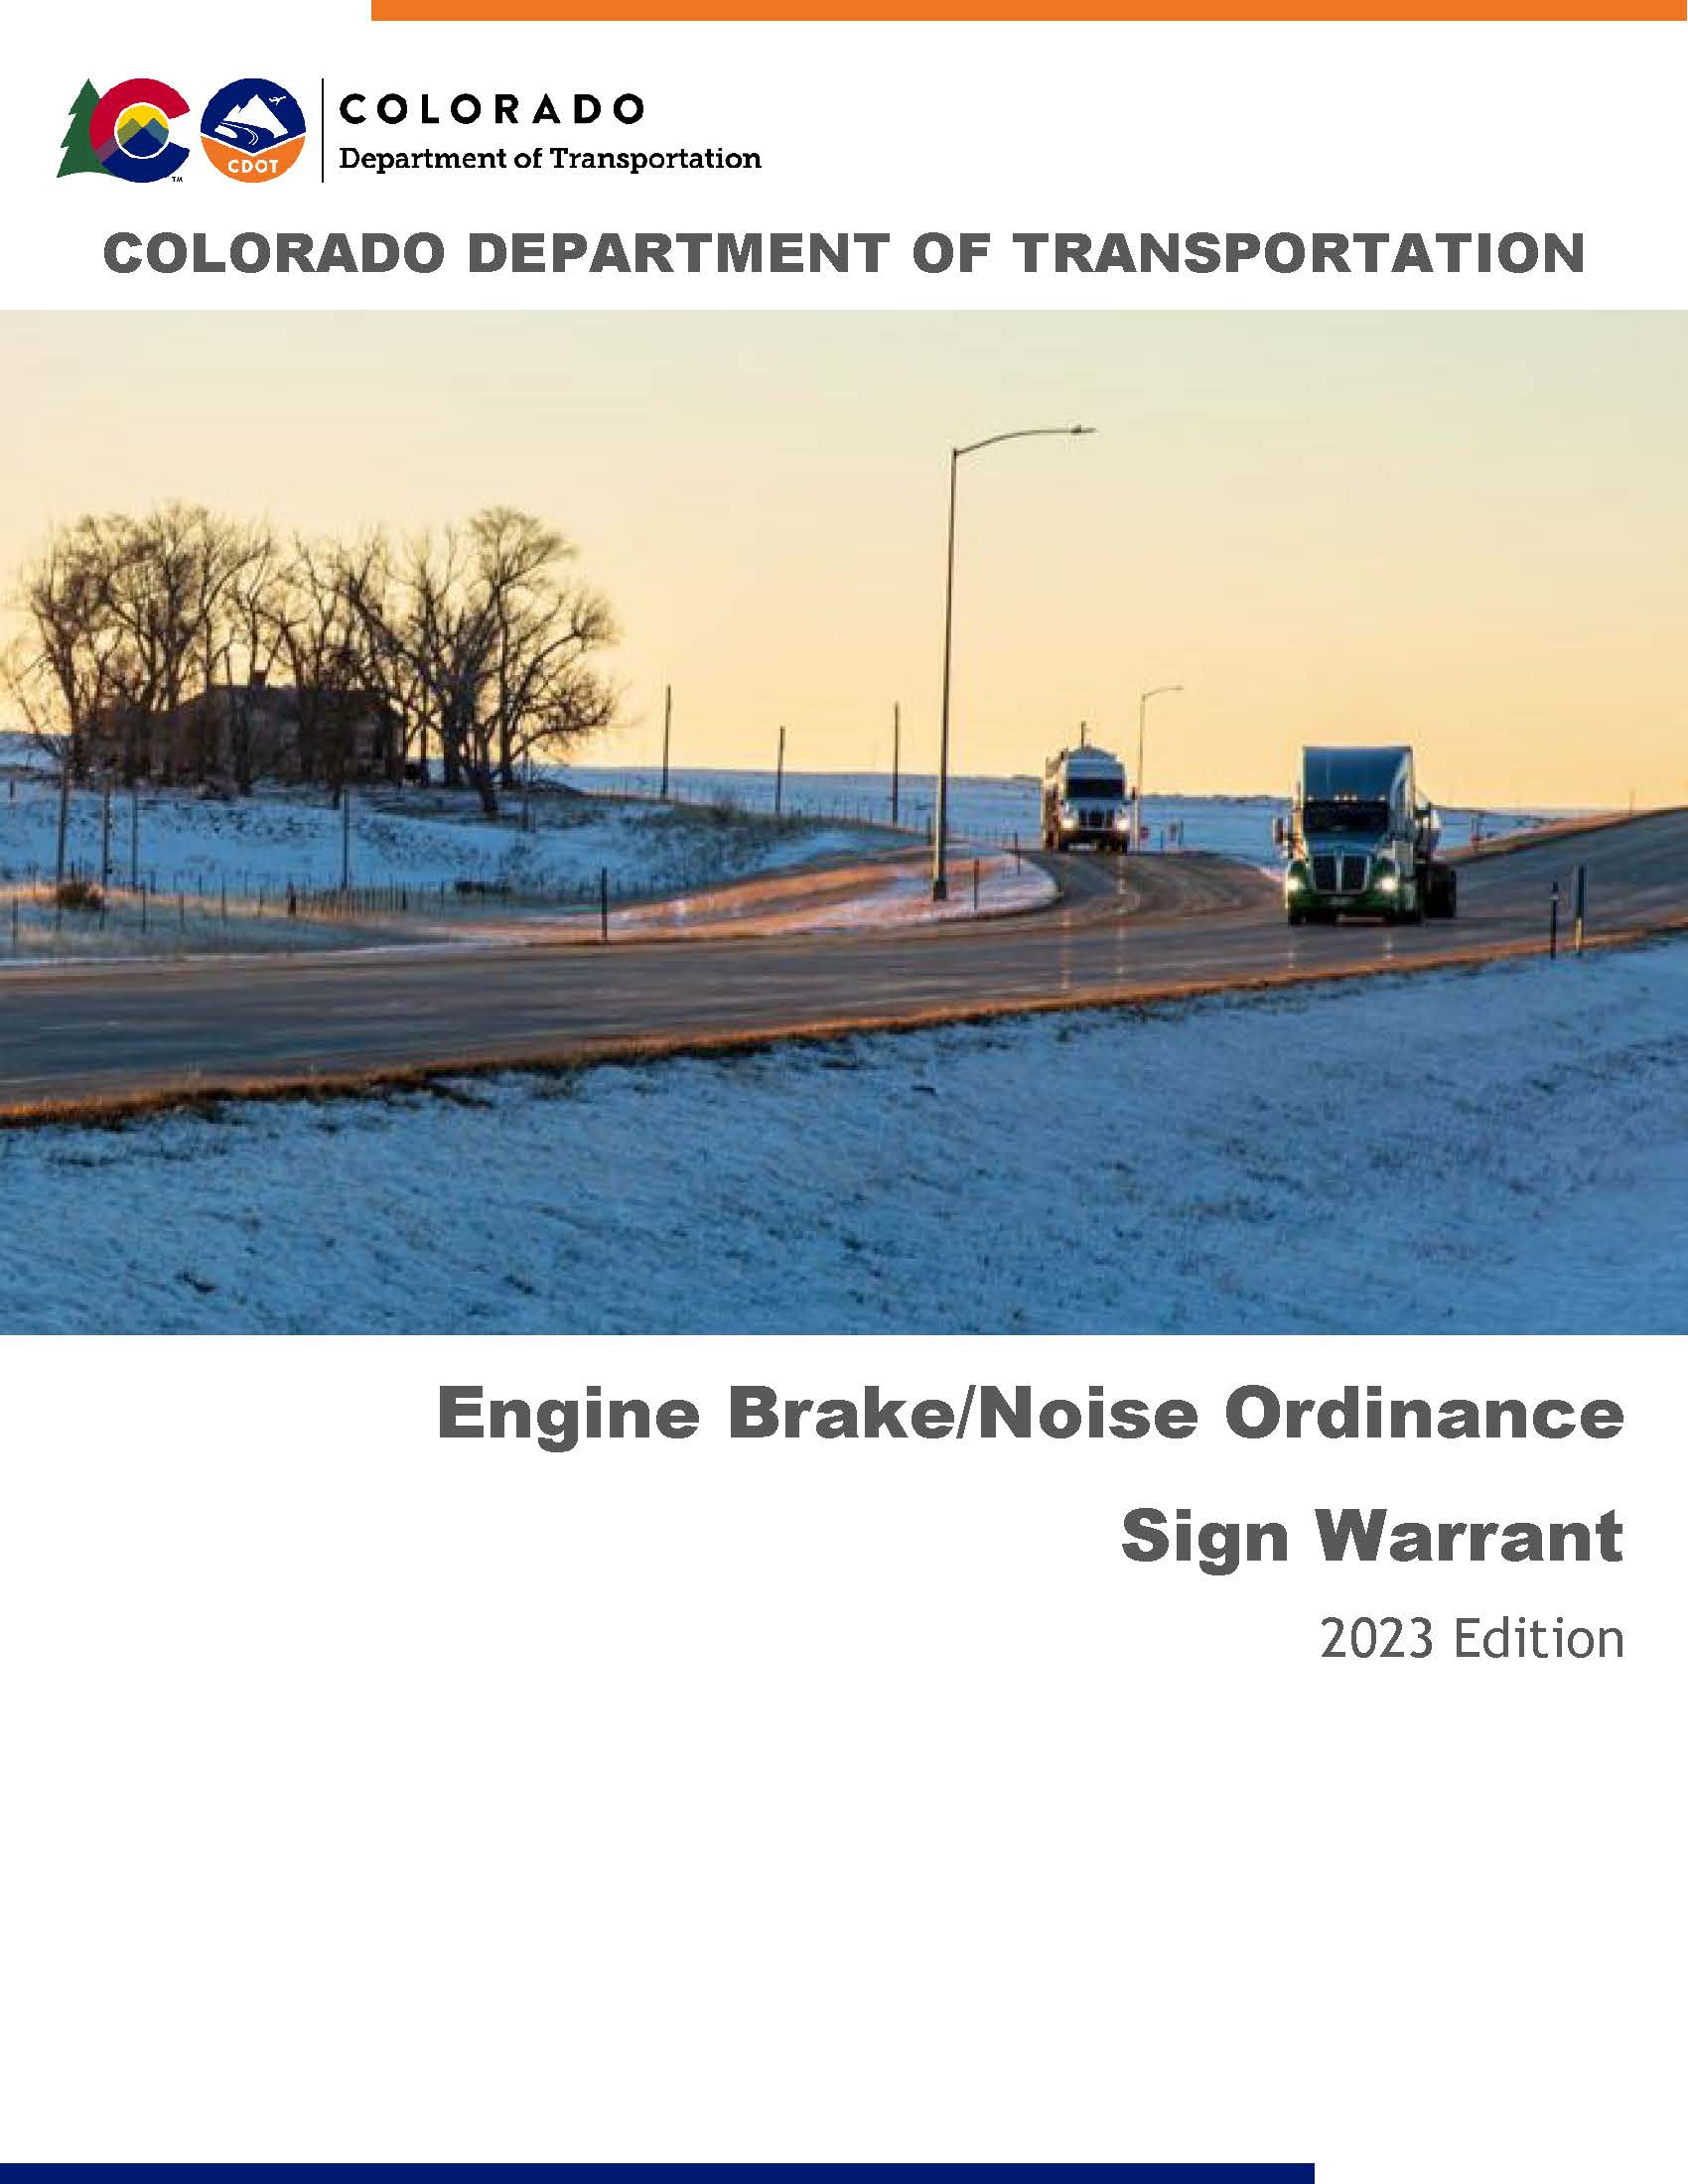 Engine Brake Sign Guidance detail image